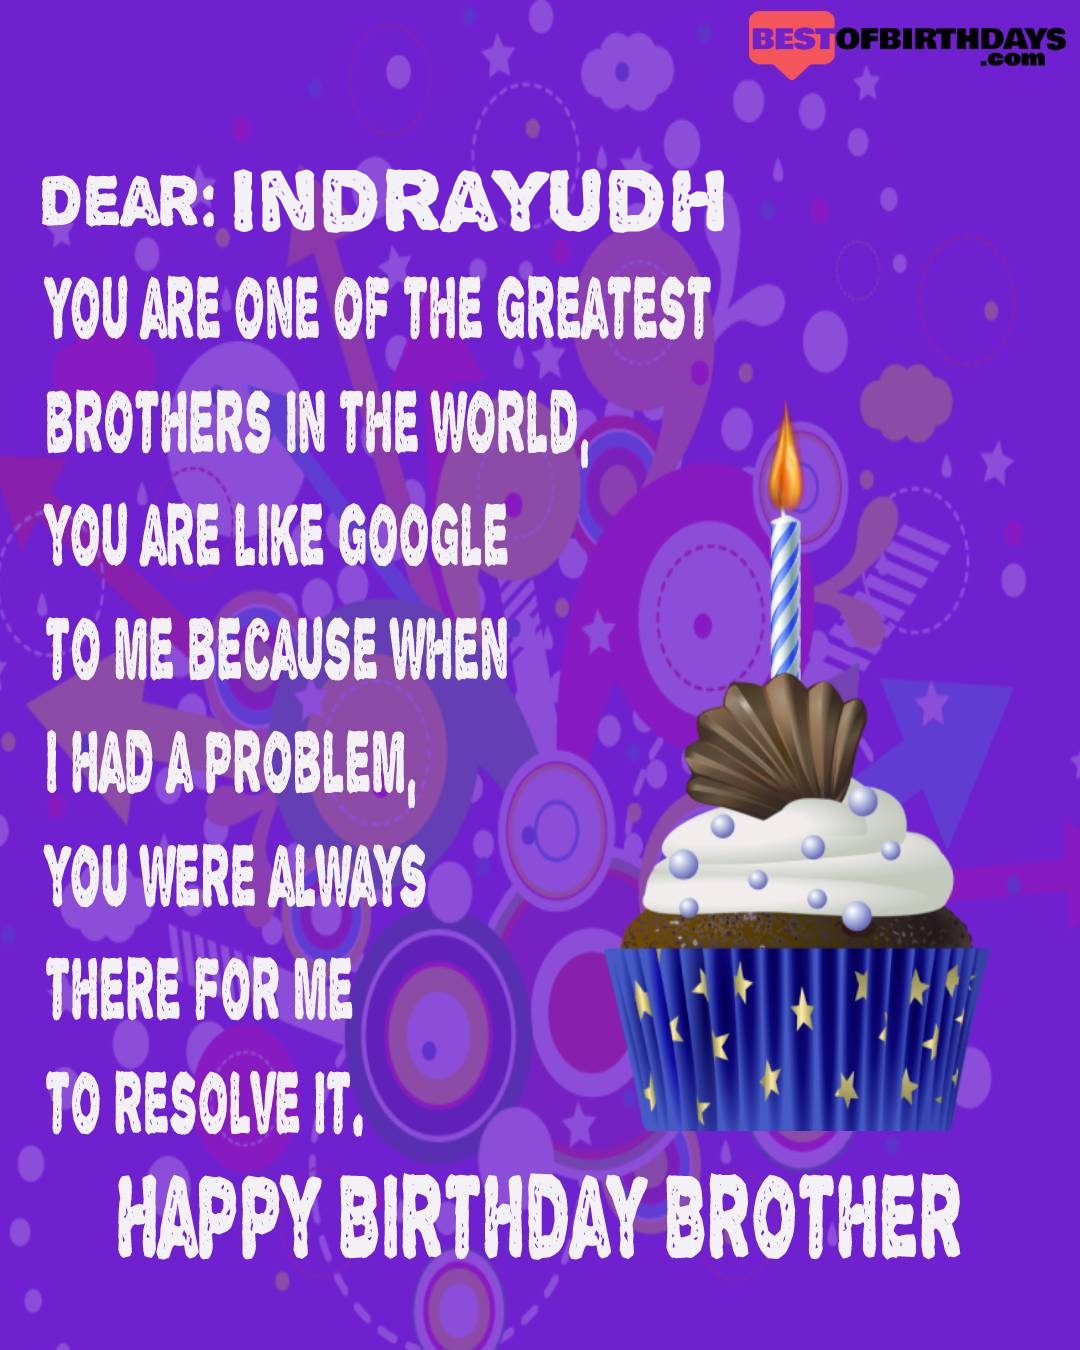 Happy birthday indrayudh bhai brother bro